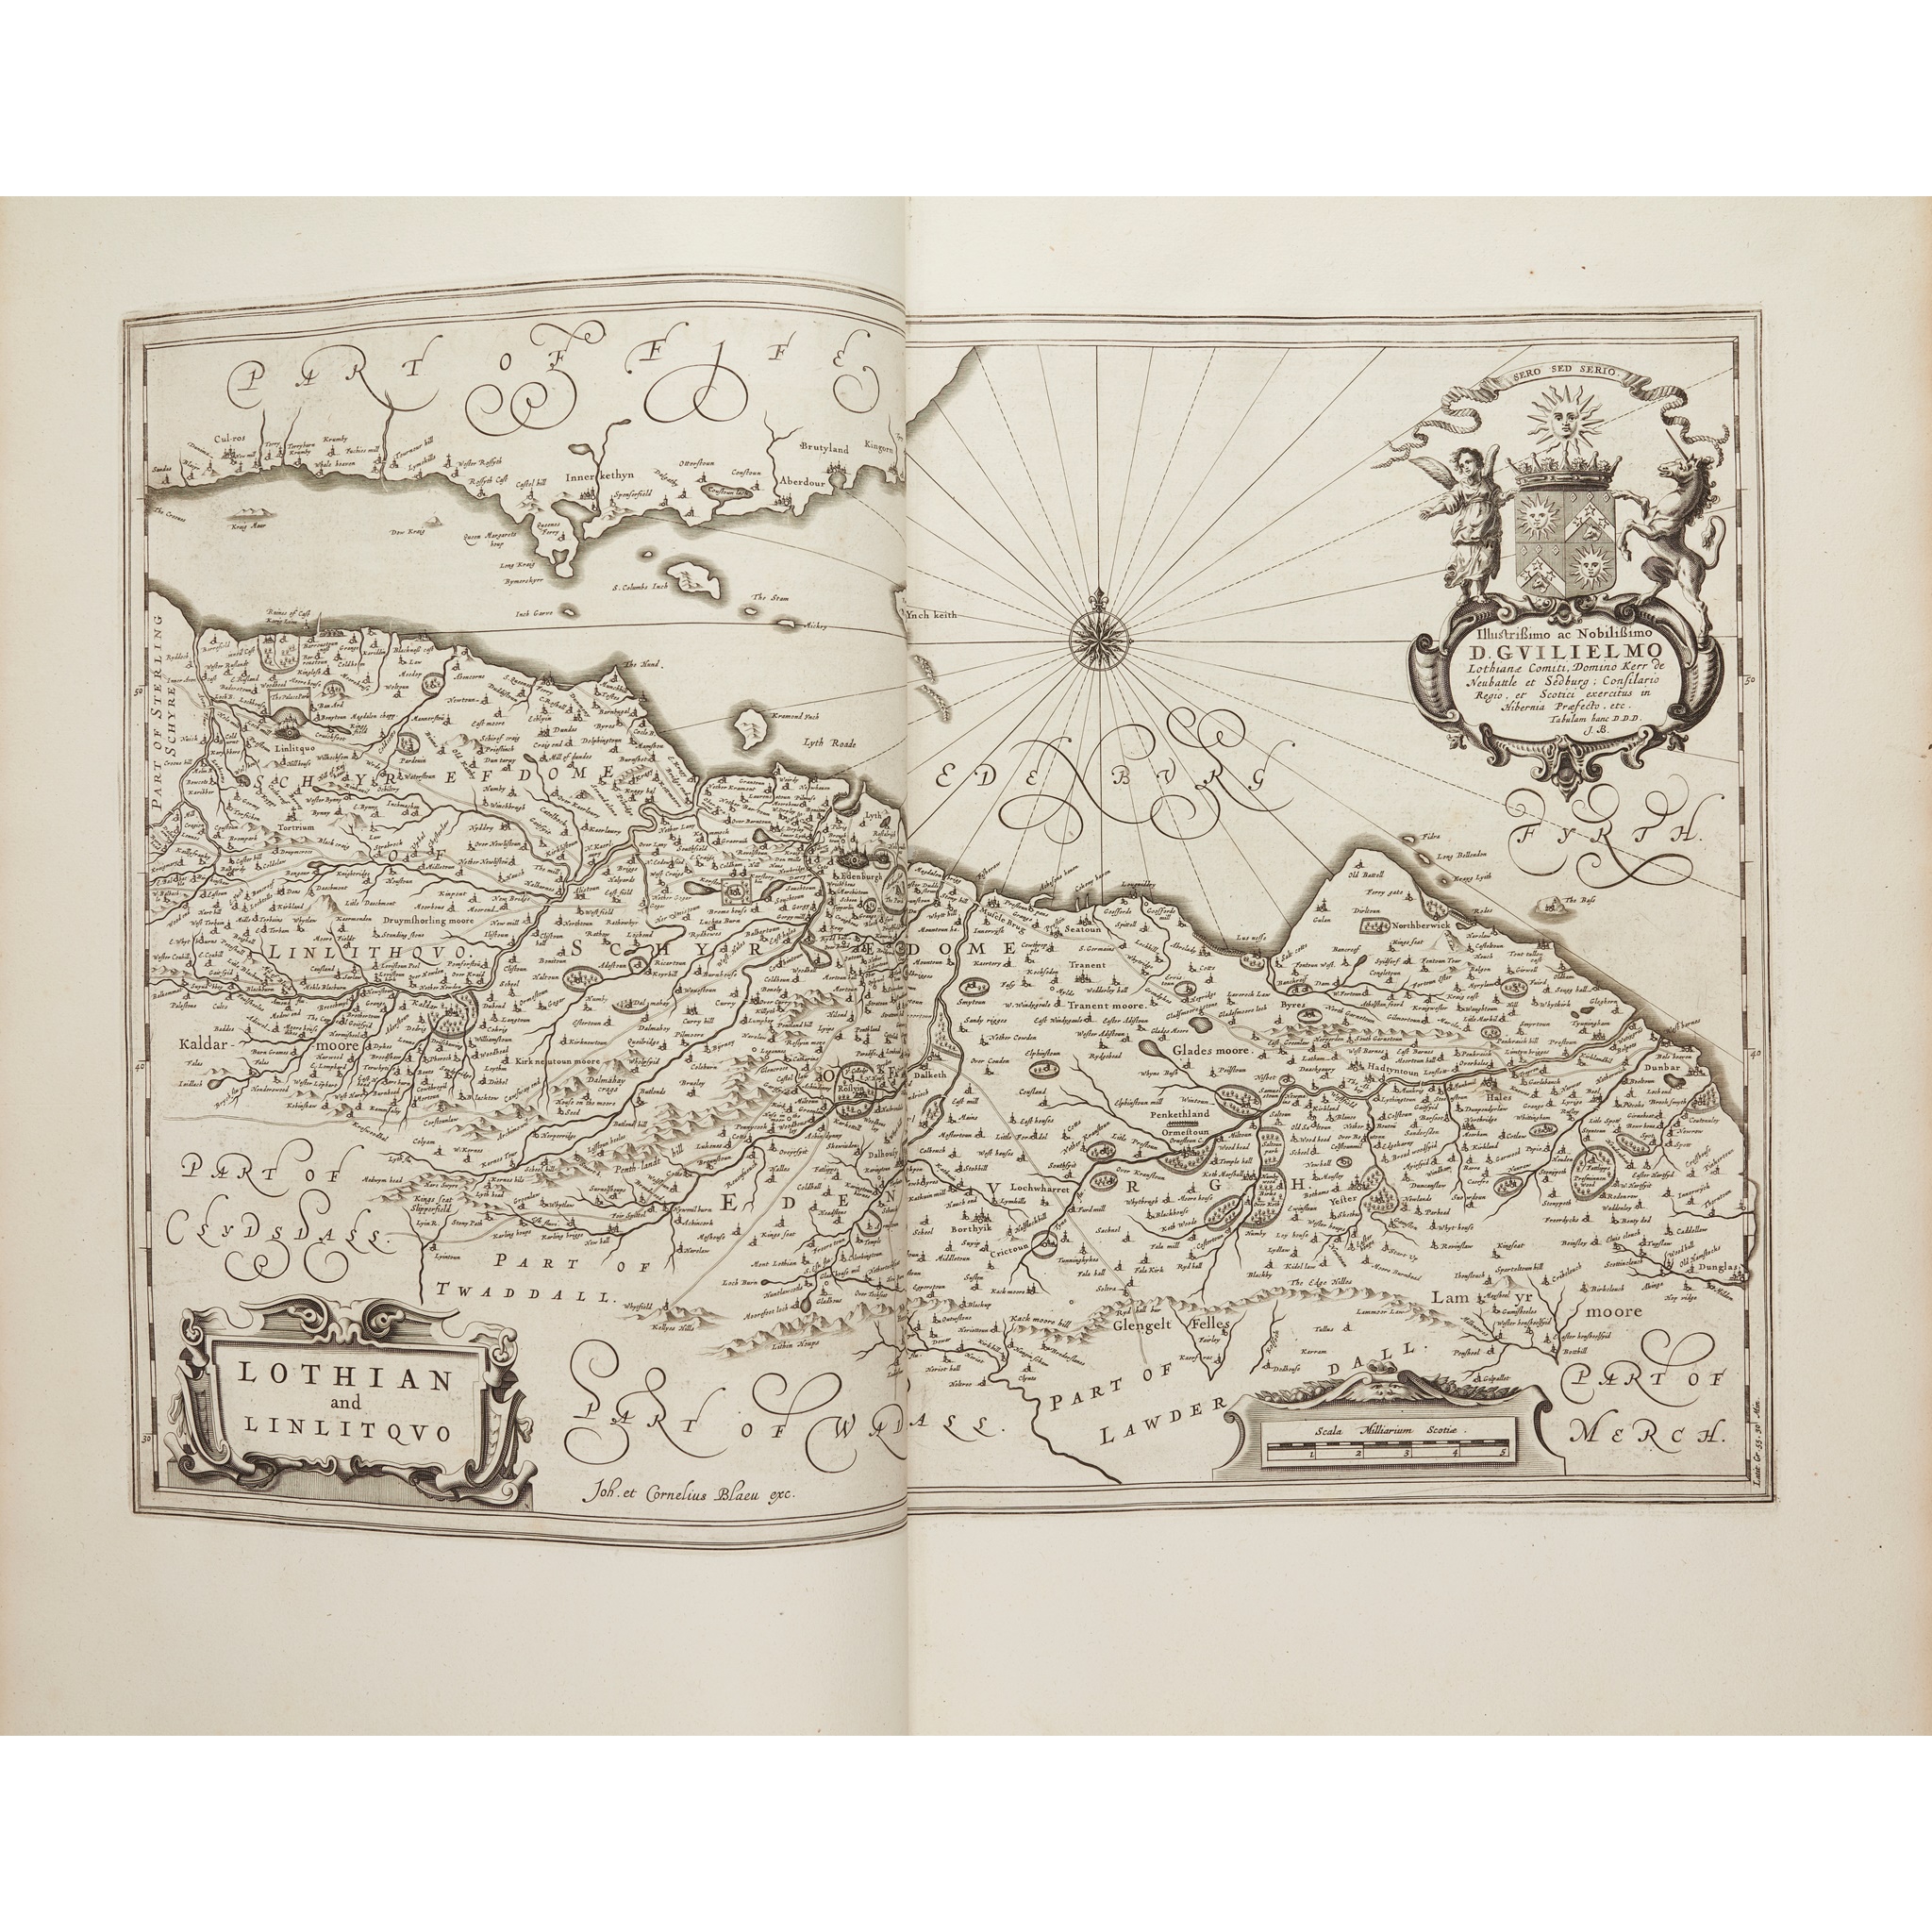 Blaeu, Joan Toonneel des Aerdryck oft Nieuwe Atlas...Vyfde Deel [Theatrum Orbis Terrarum, part V] - Image 20 of 25